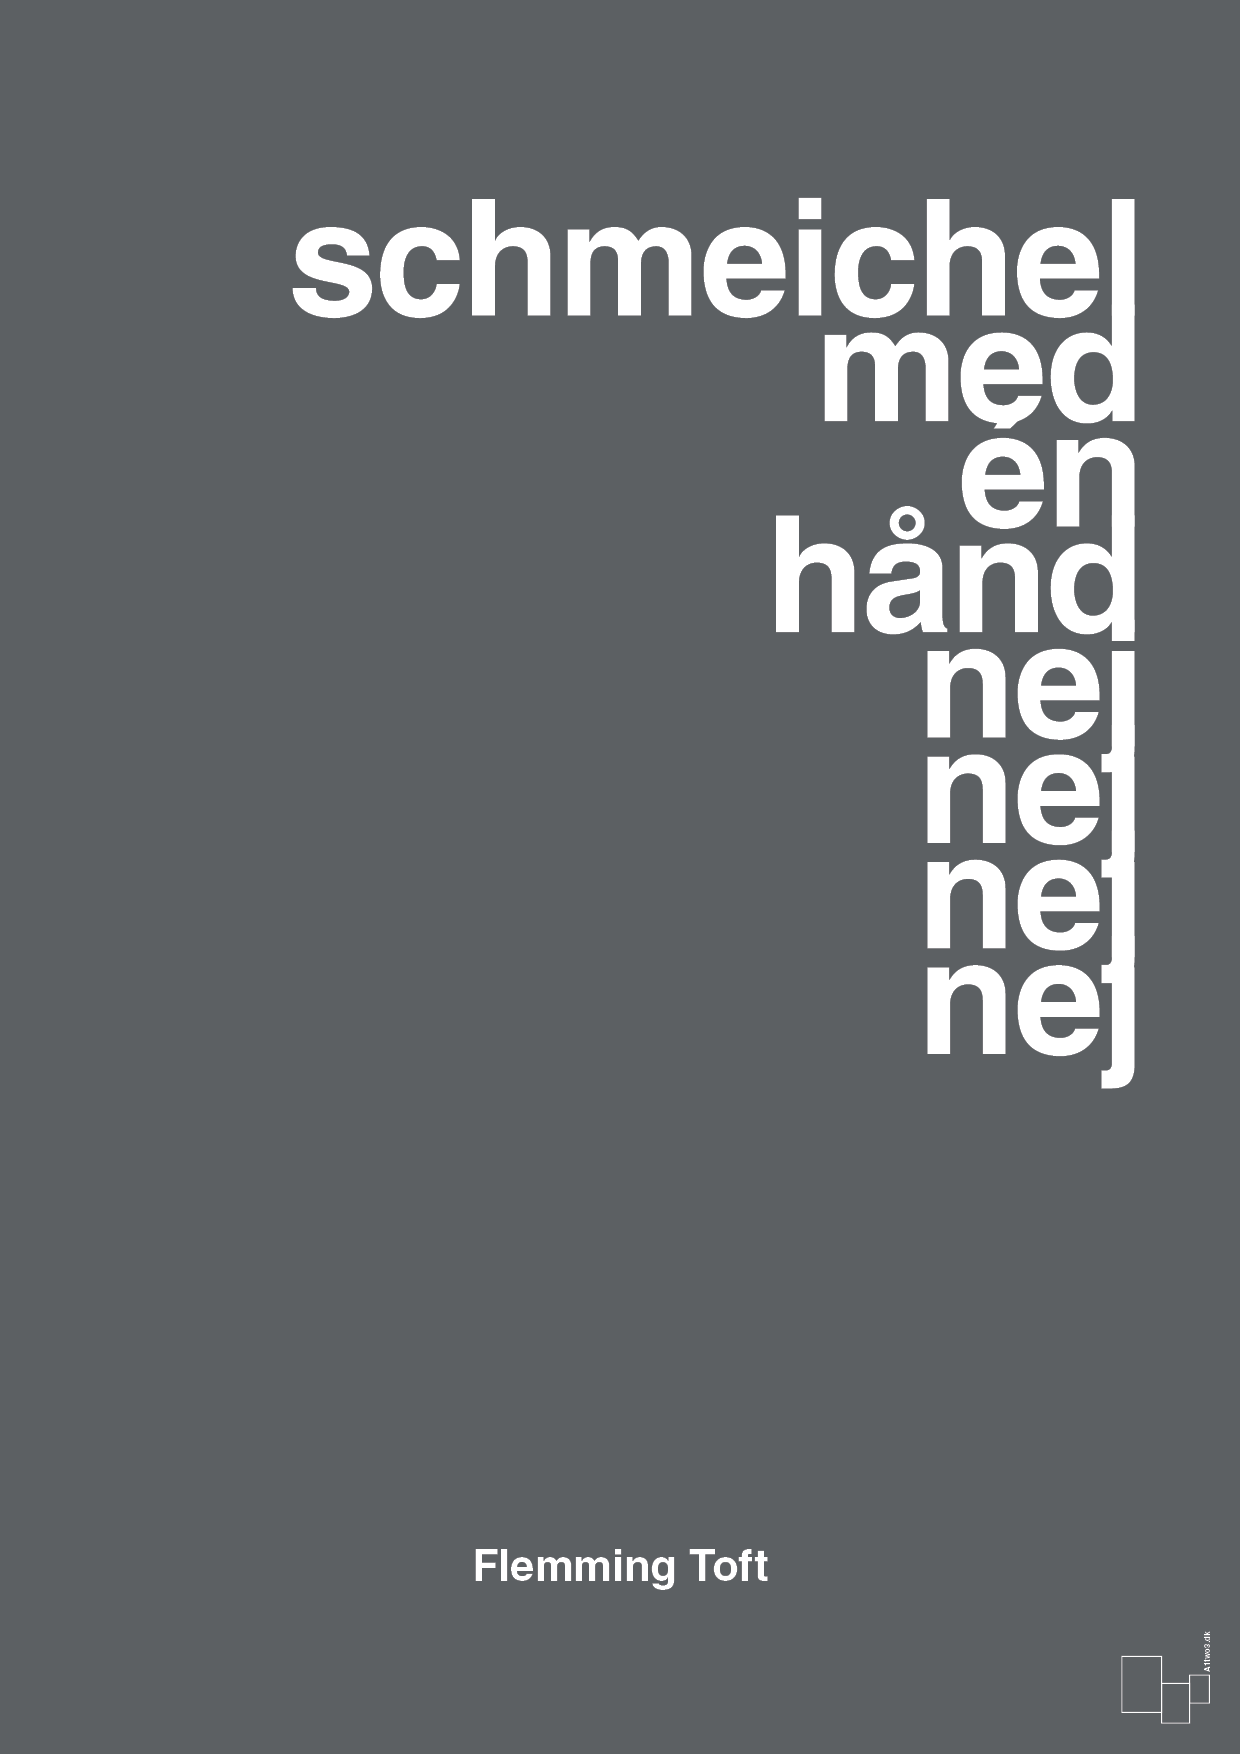 schmeichel med én hånd nej nej nej nej - Plakat med Citater i Graphic Charcoal